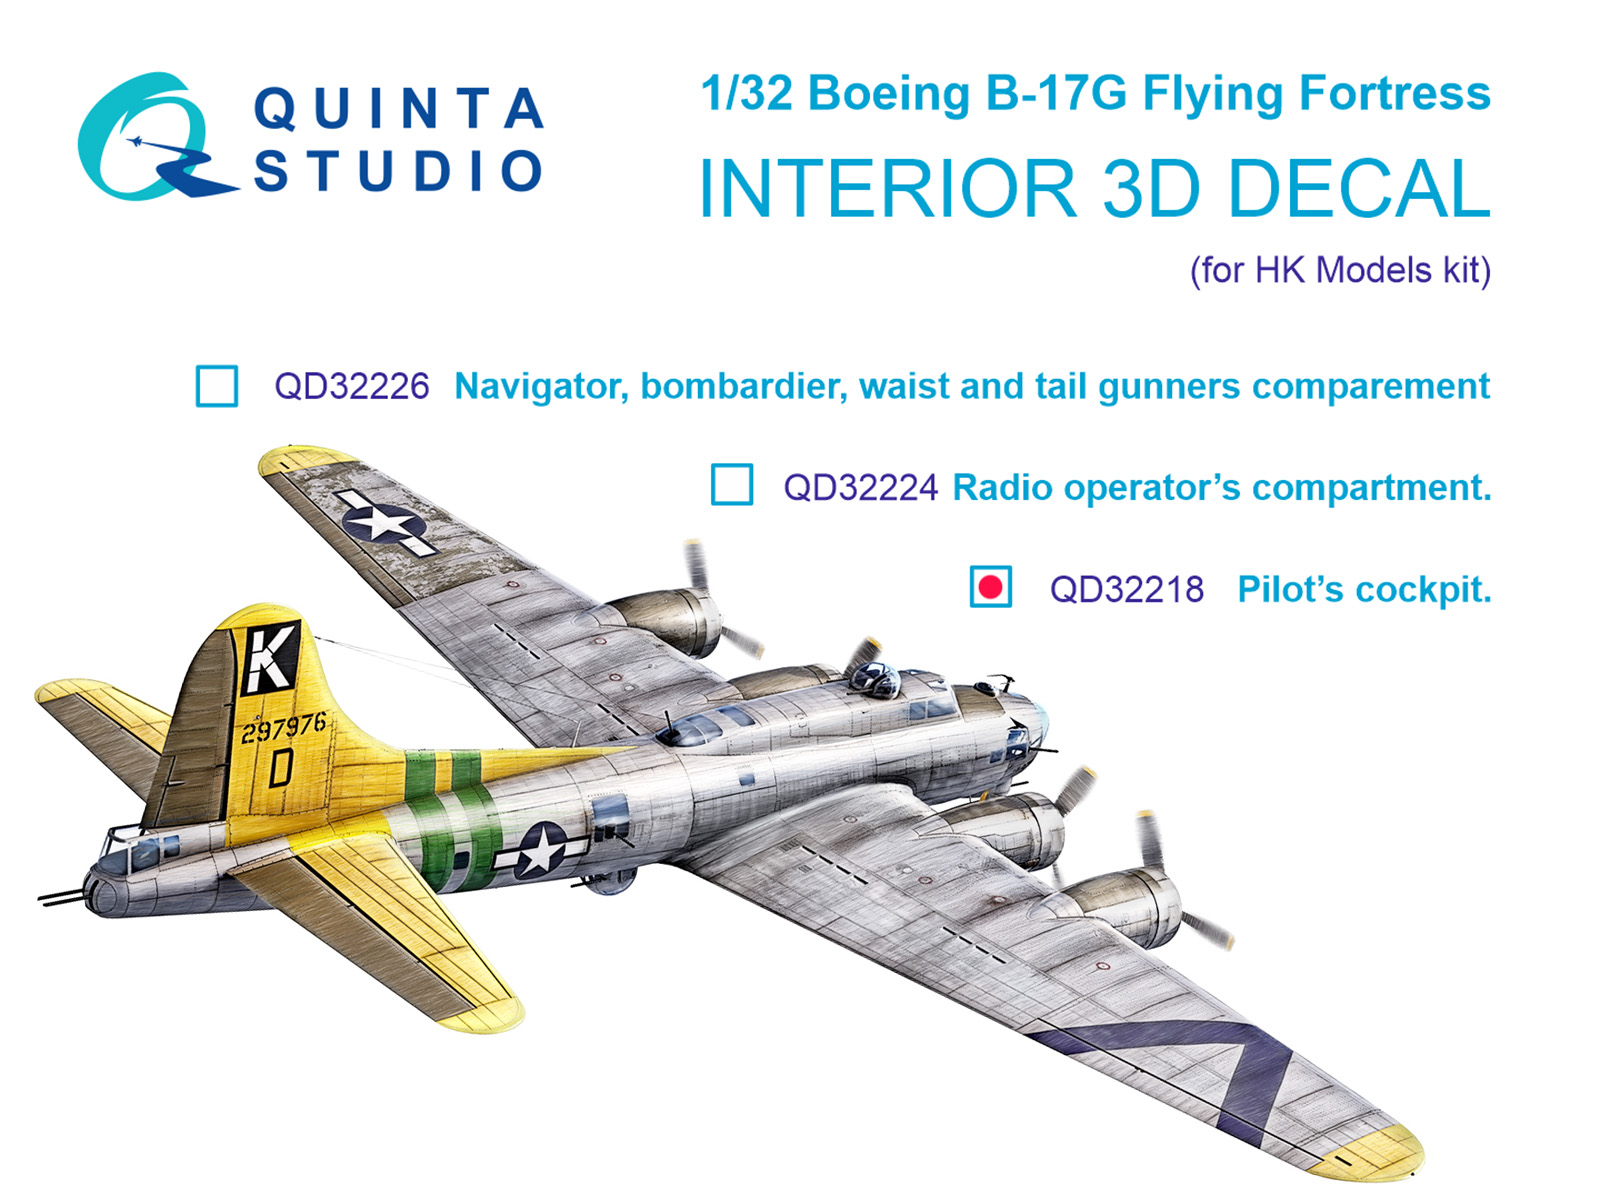 3D Декаль интерьера кабины Boeing B-17G, Пилотская кабина (HK models)